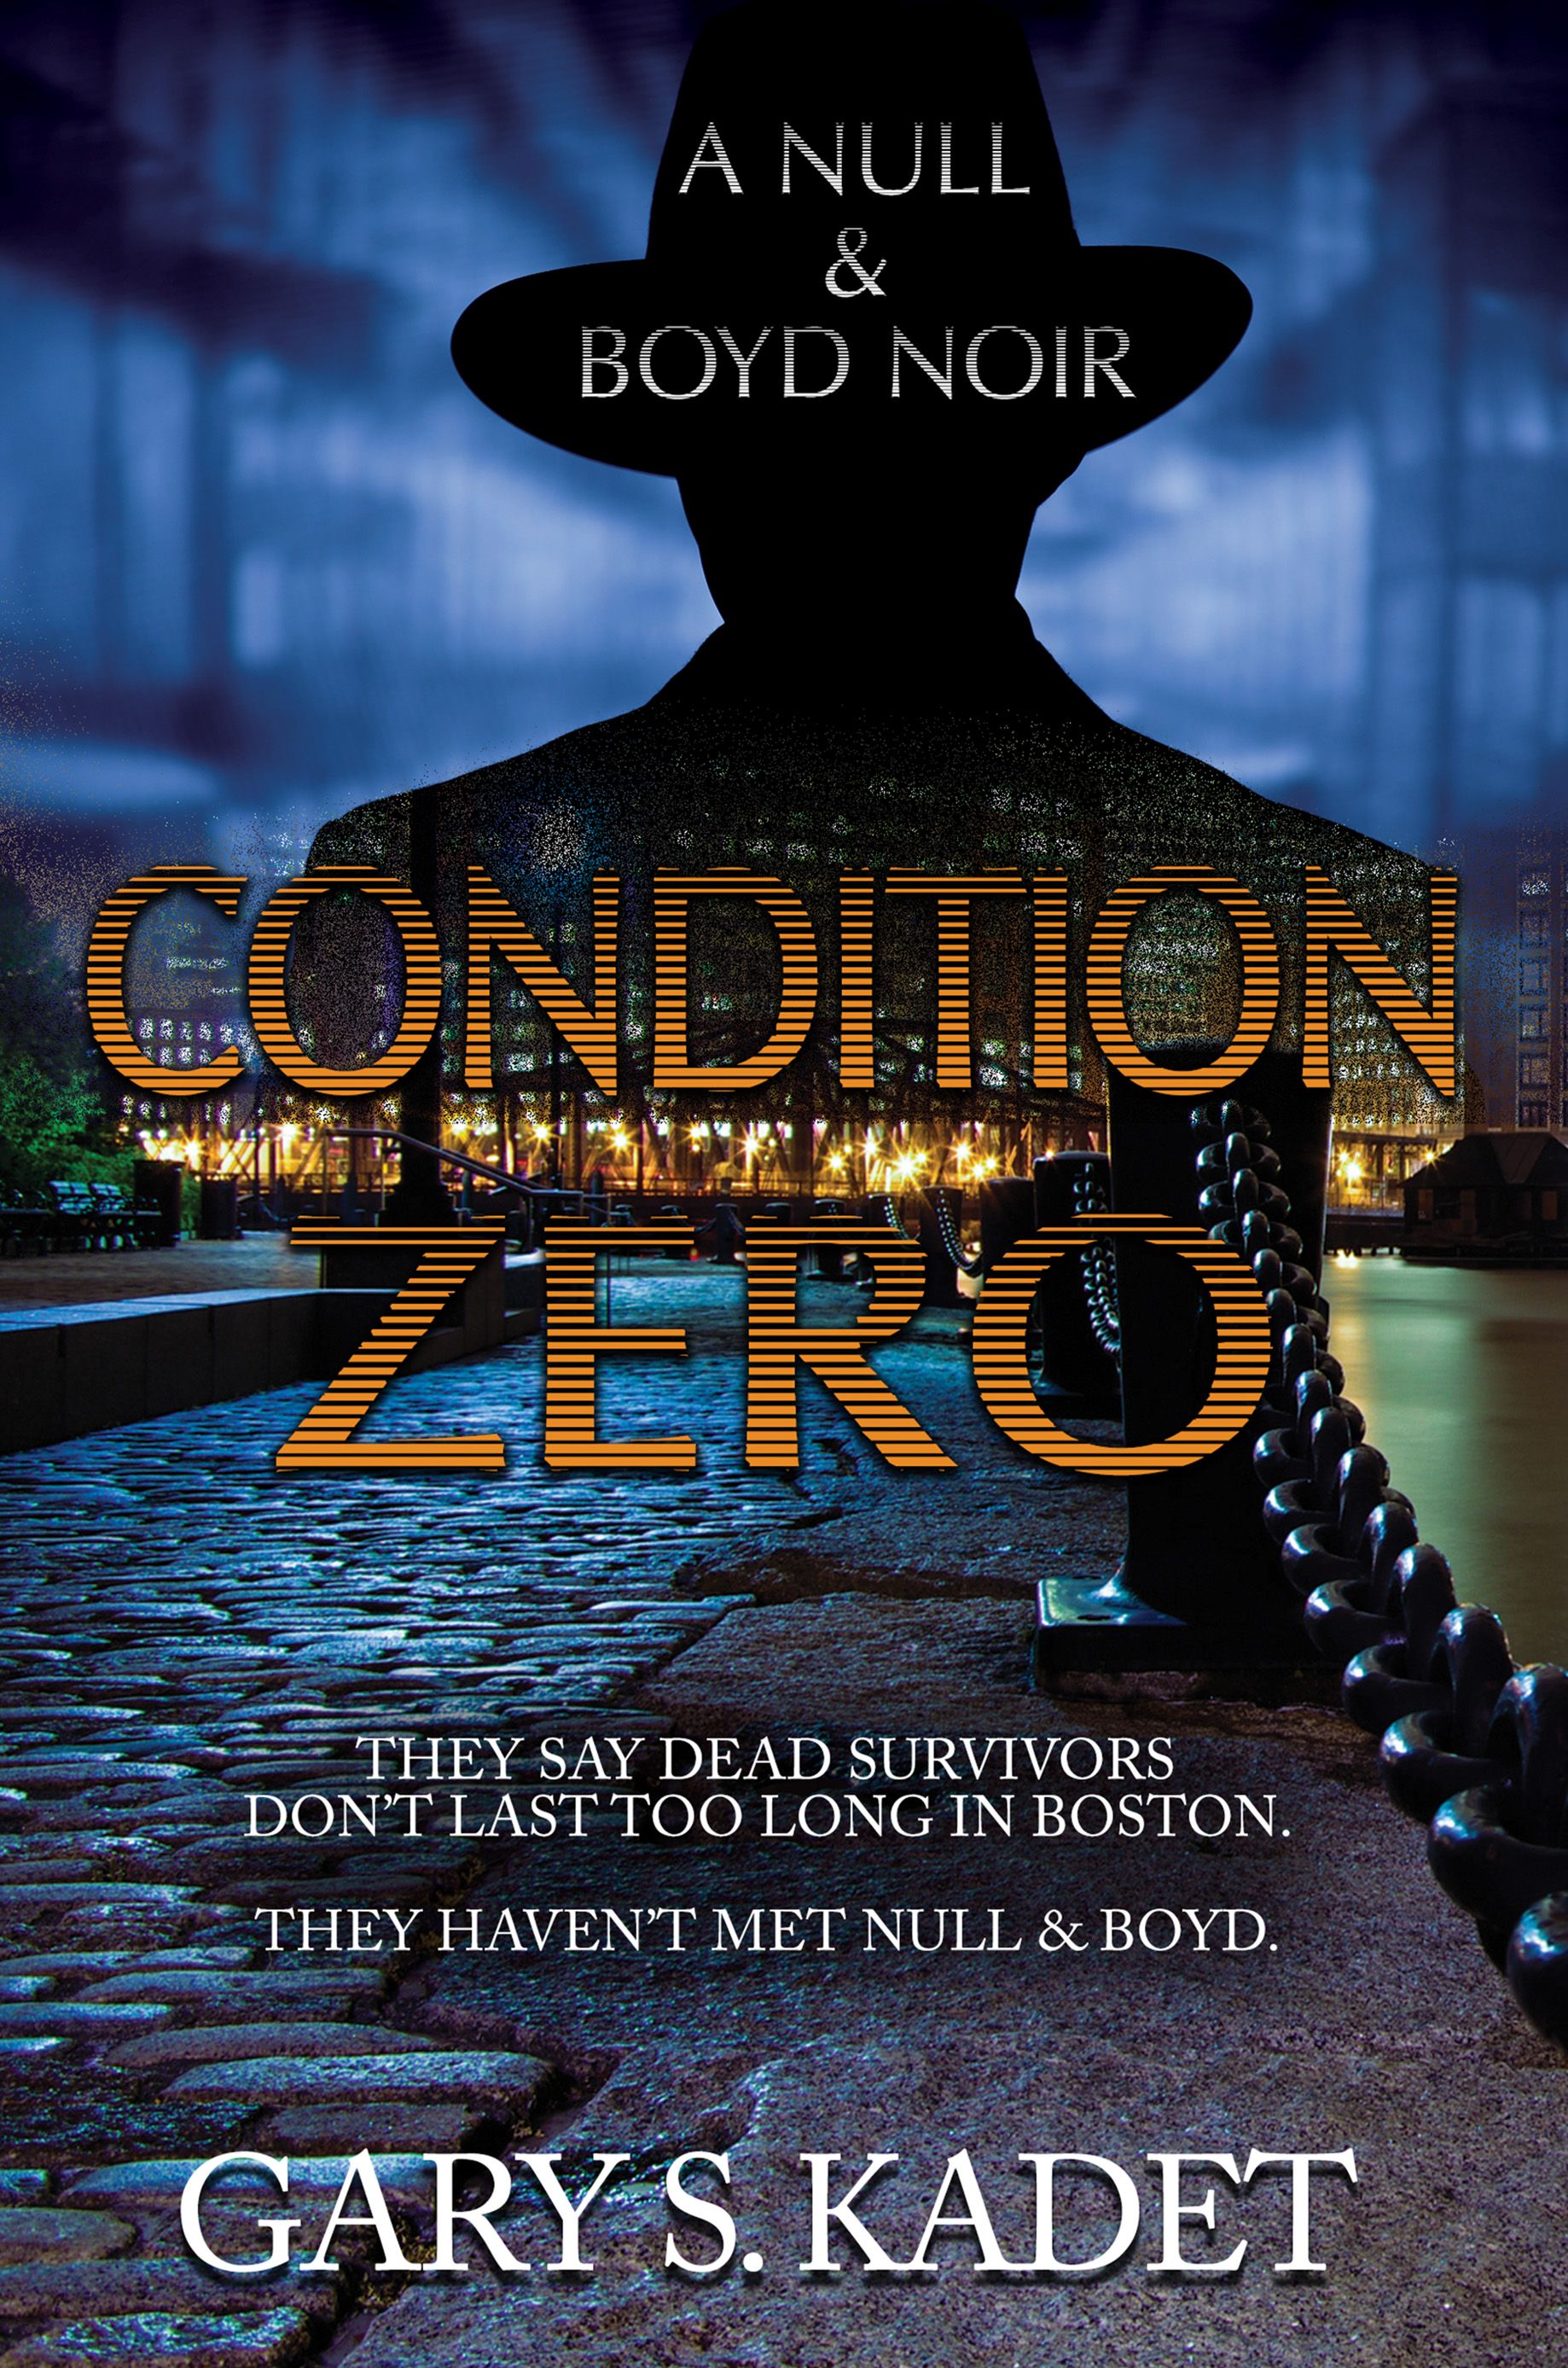 "Condition Zero"'s Book Image